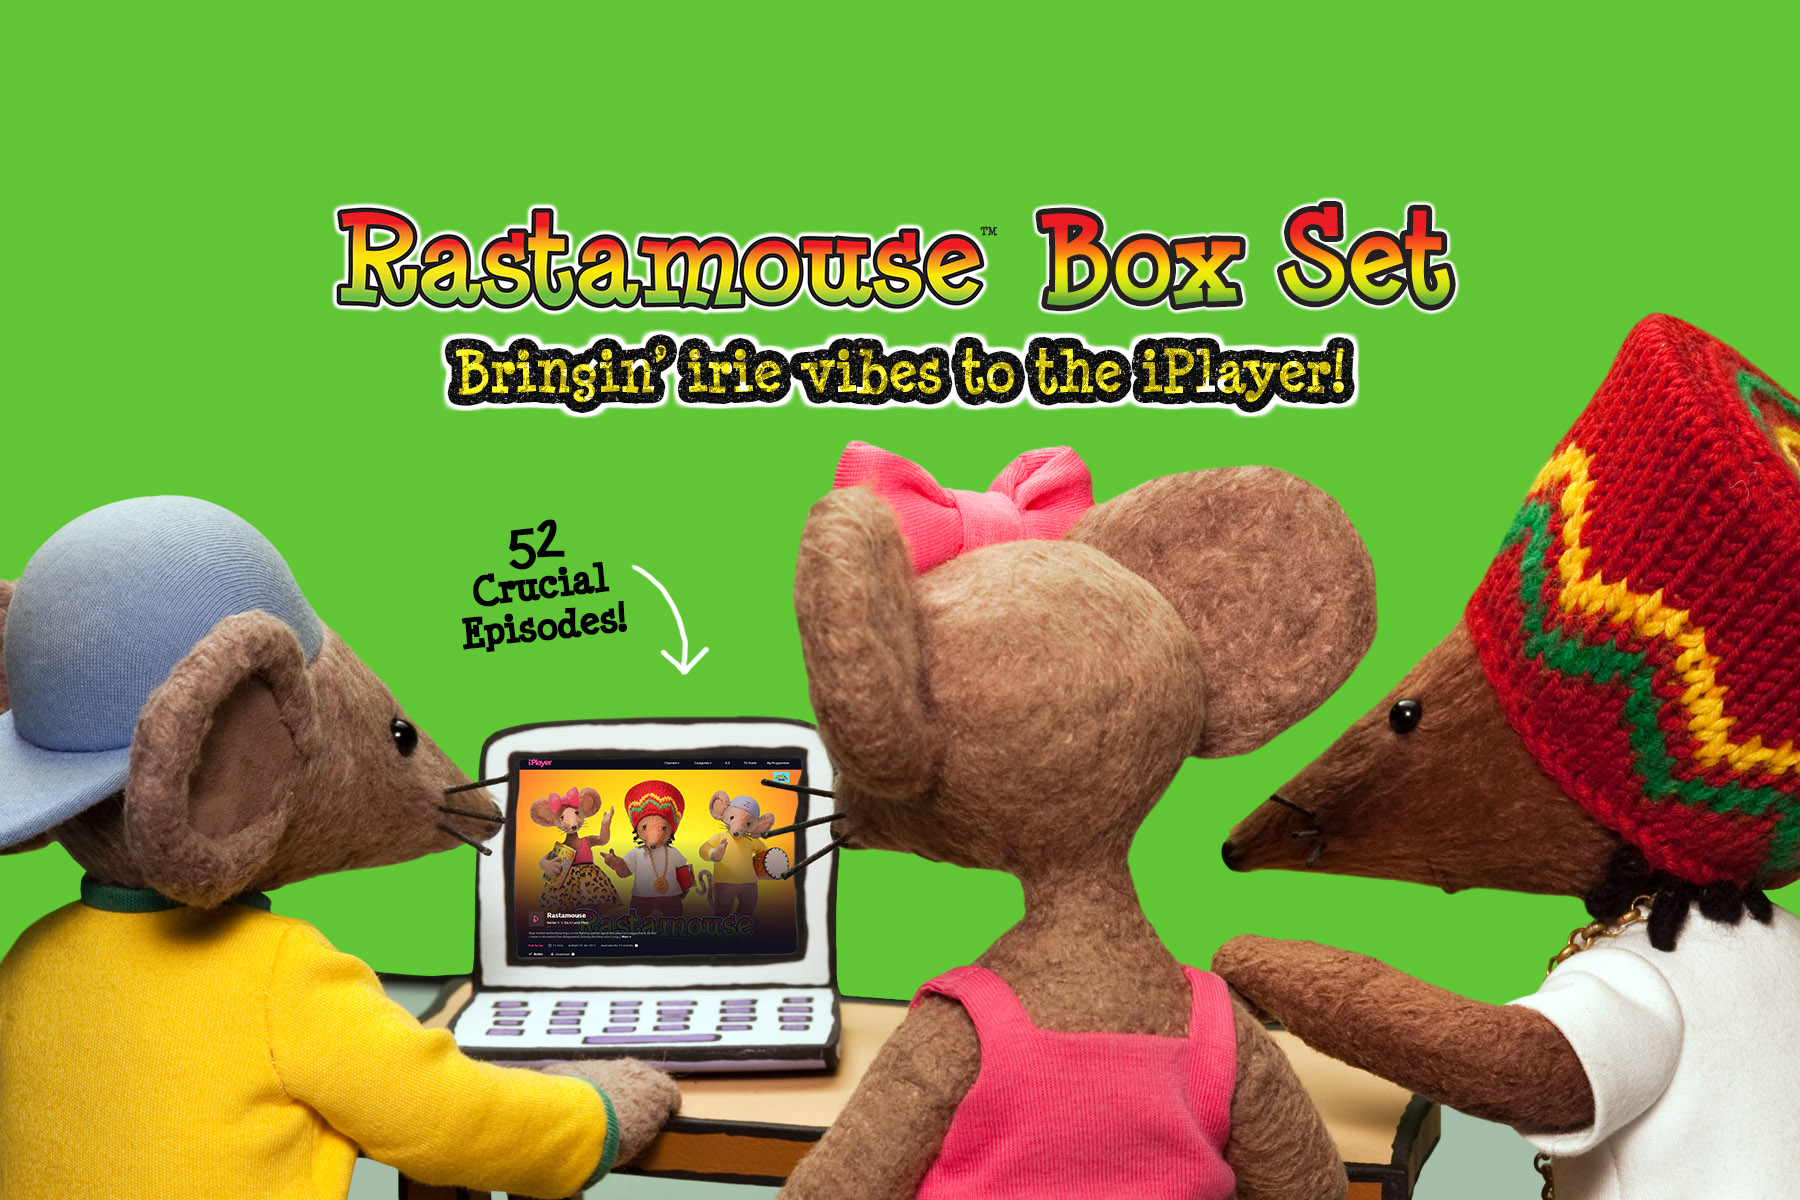 Rastamouse Plush Soft Toy 14” Rasta Mouse BBC CBeebies Rastafarian 